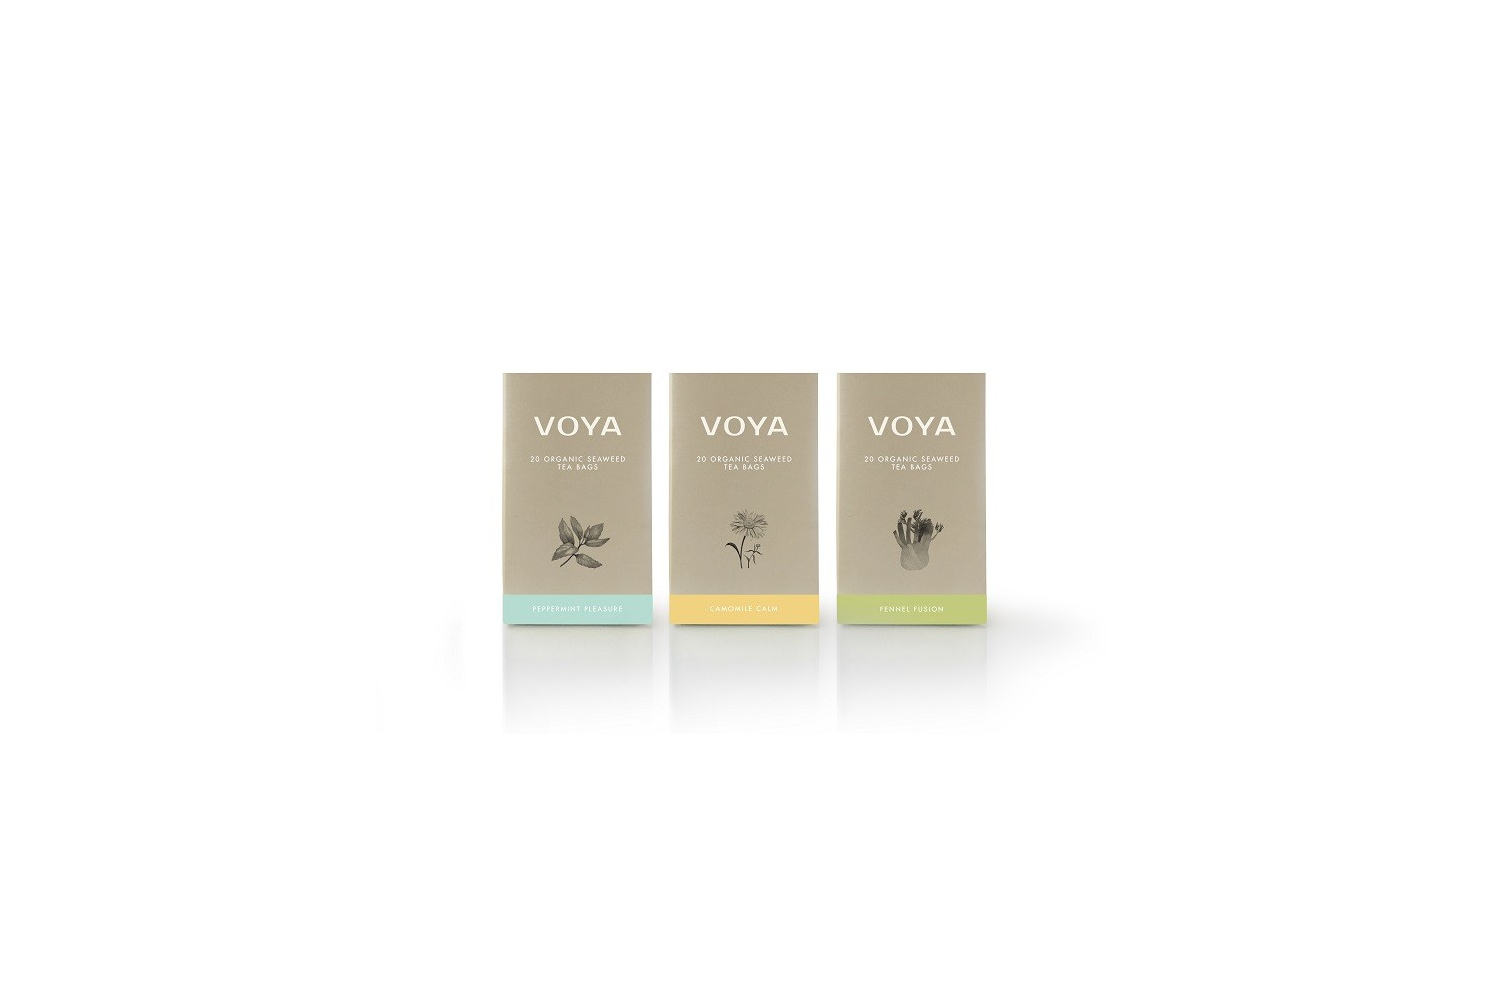 VOYA unveils rebranded luxury tea range